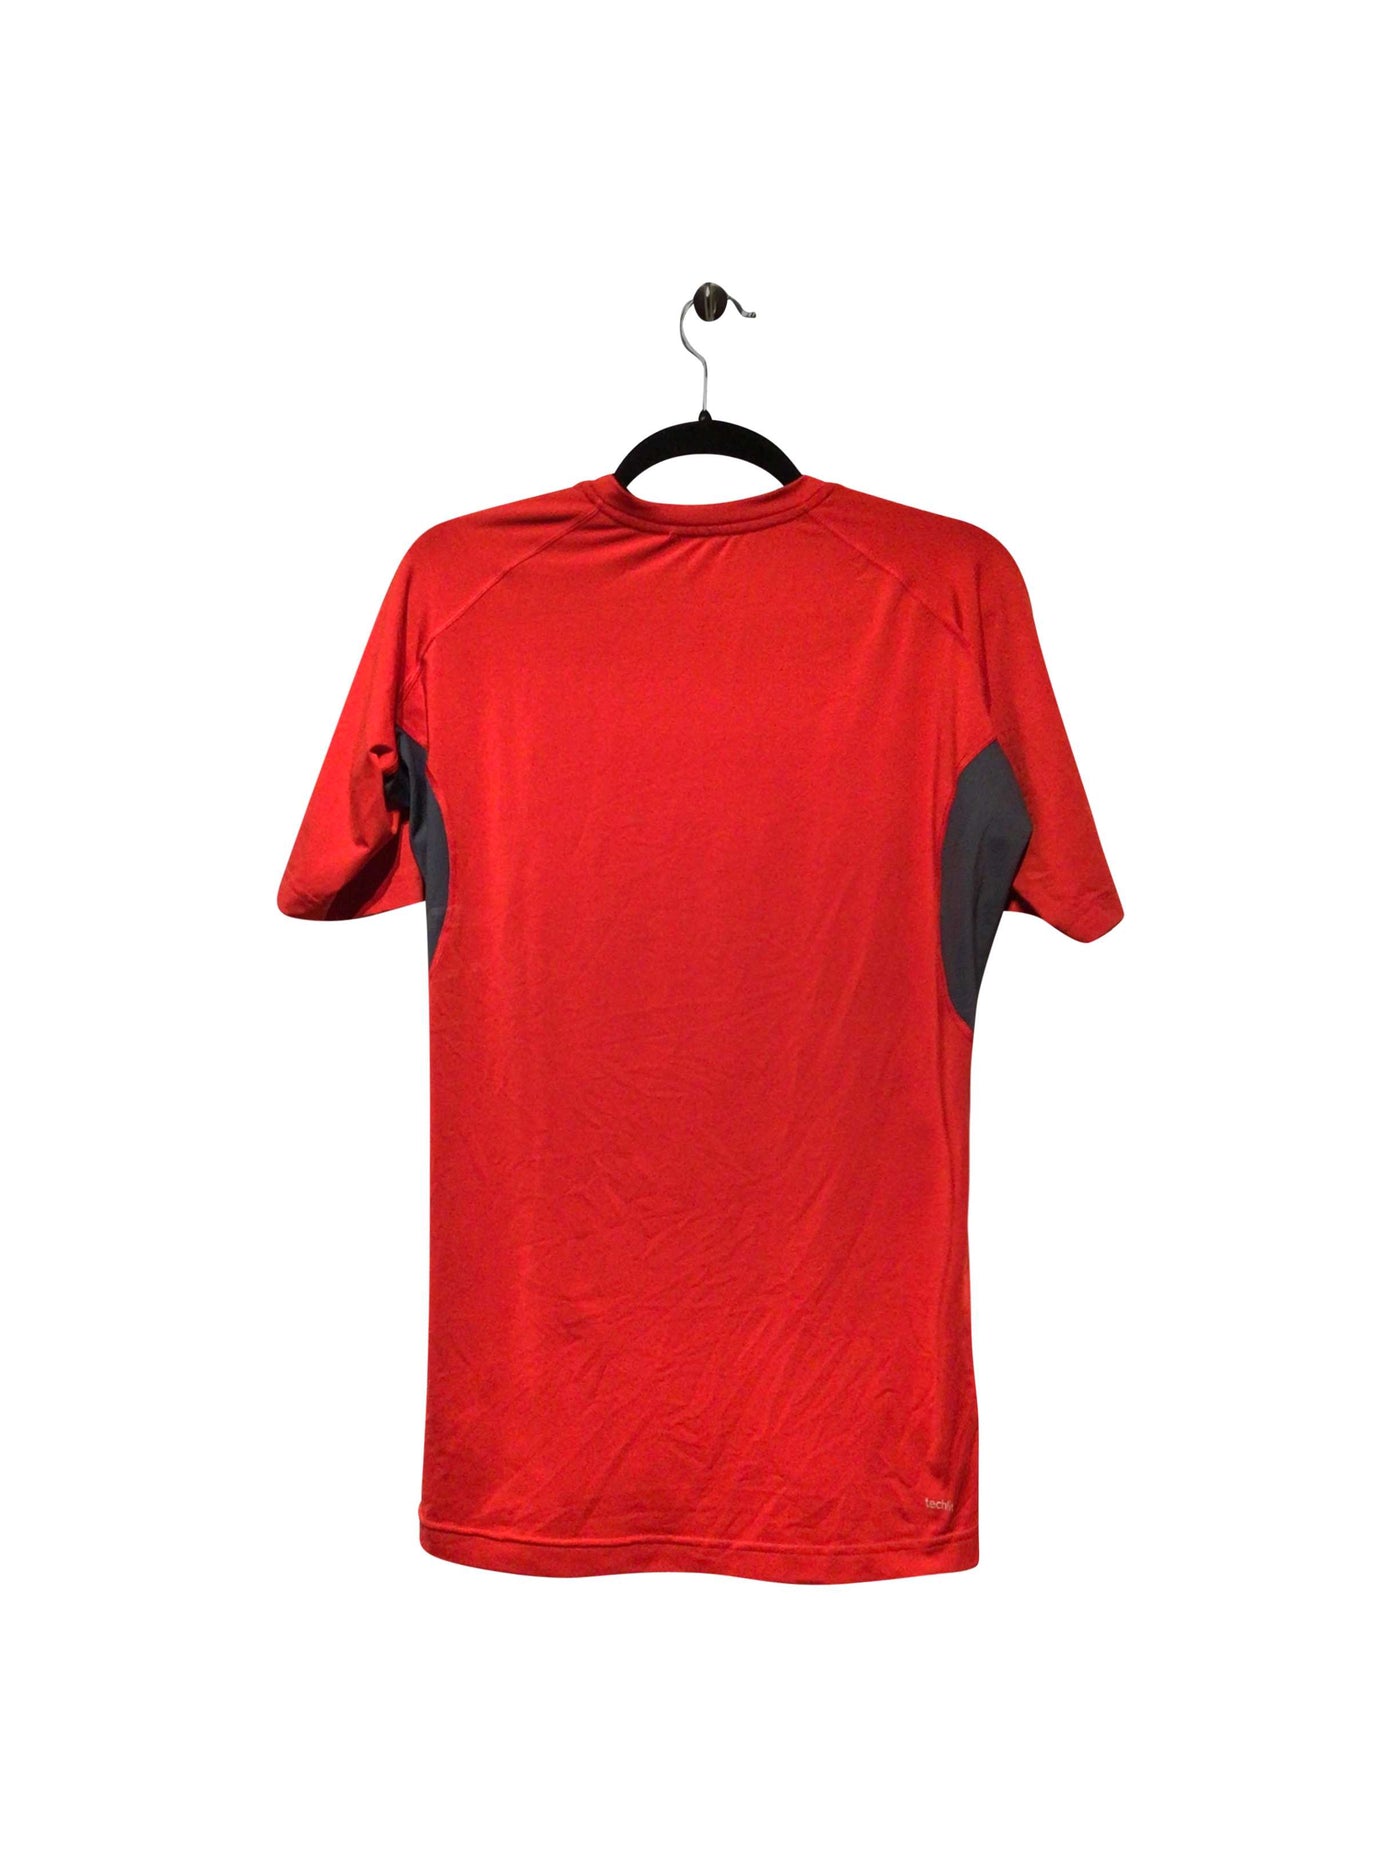 ADIDAS Regular fit T-shirt in Red  -  L  14.99 Koop